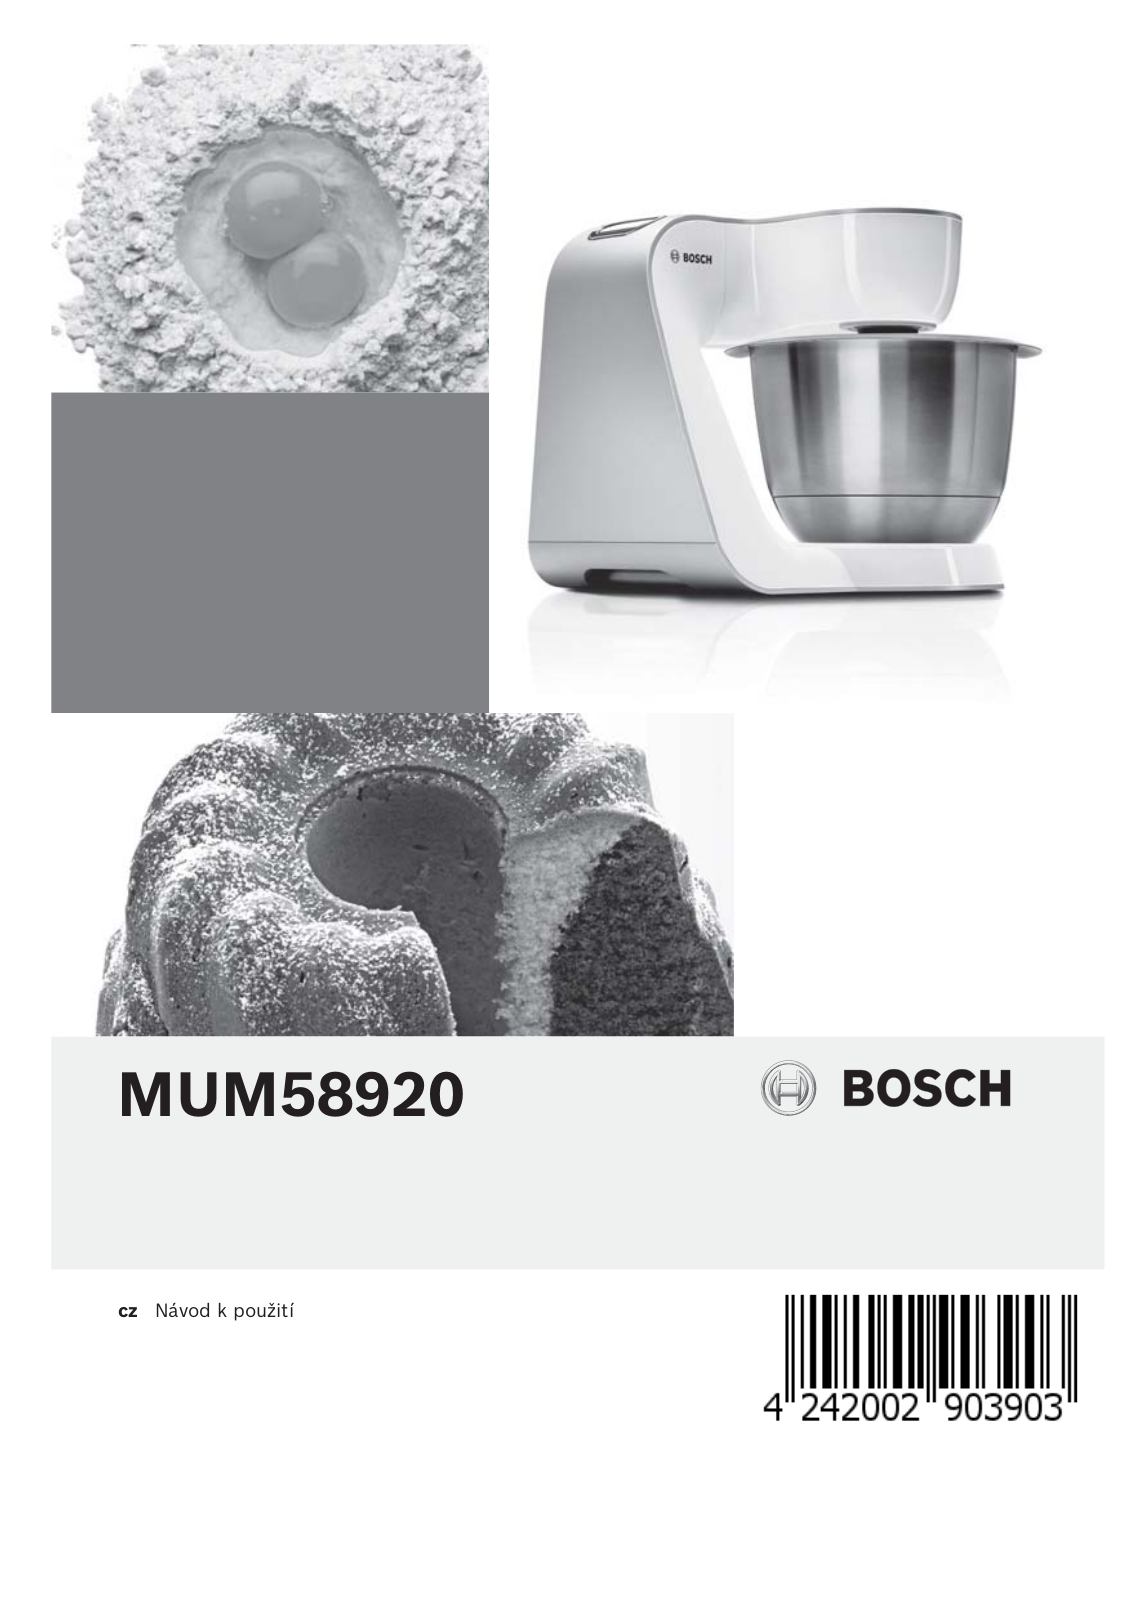 Bosch MUM58920 User Manual